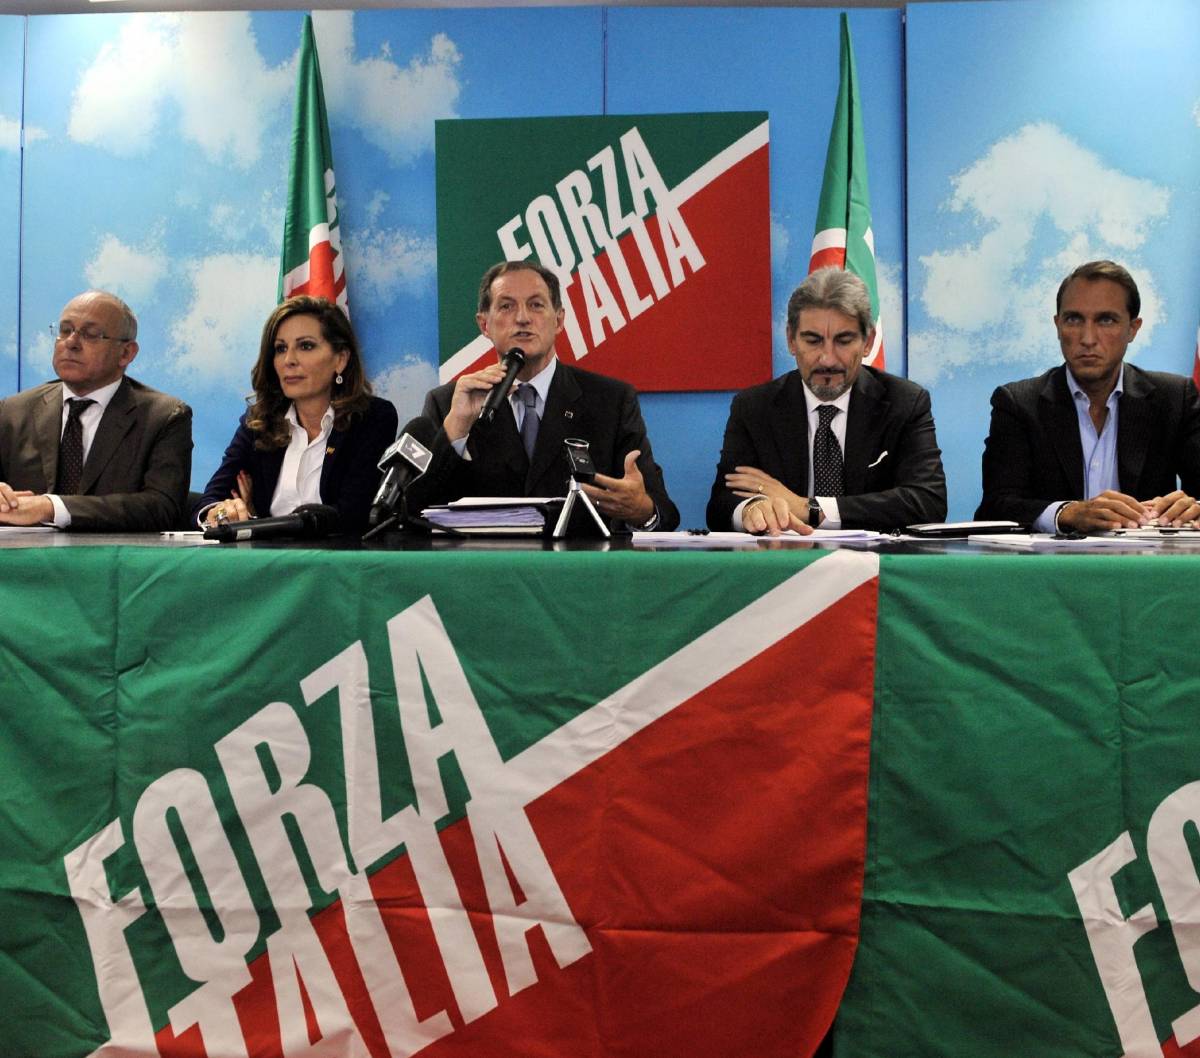 Pdl in soffitta, gruppi di Forza Italia